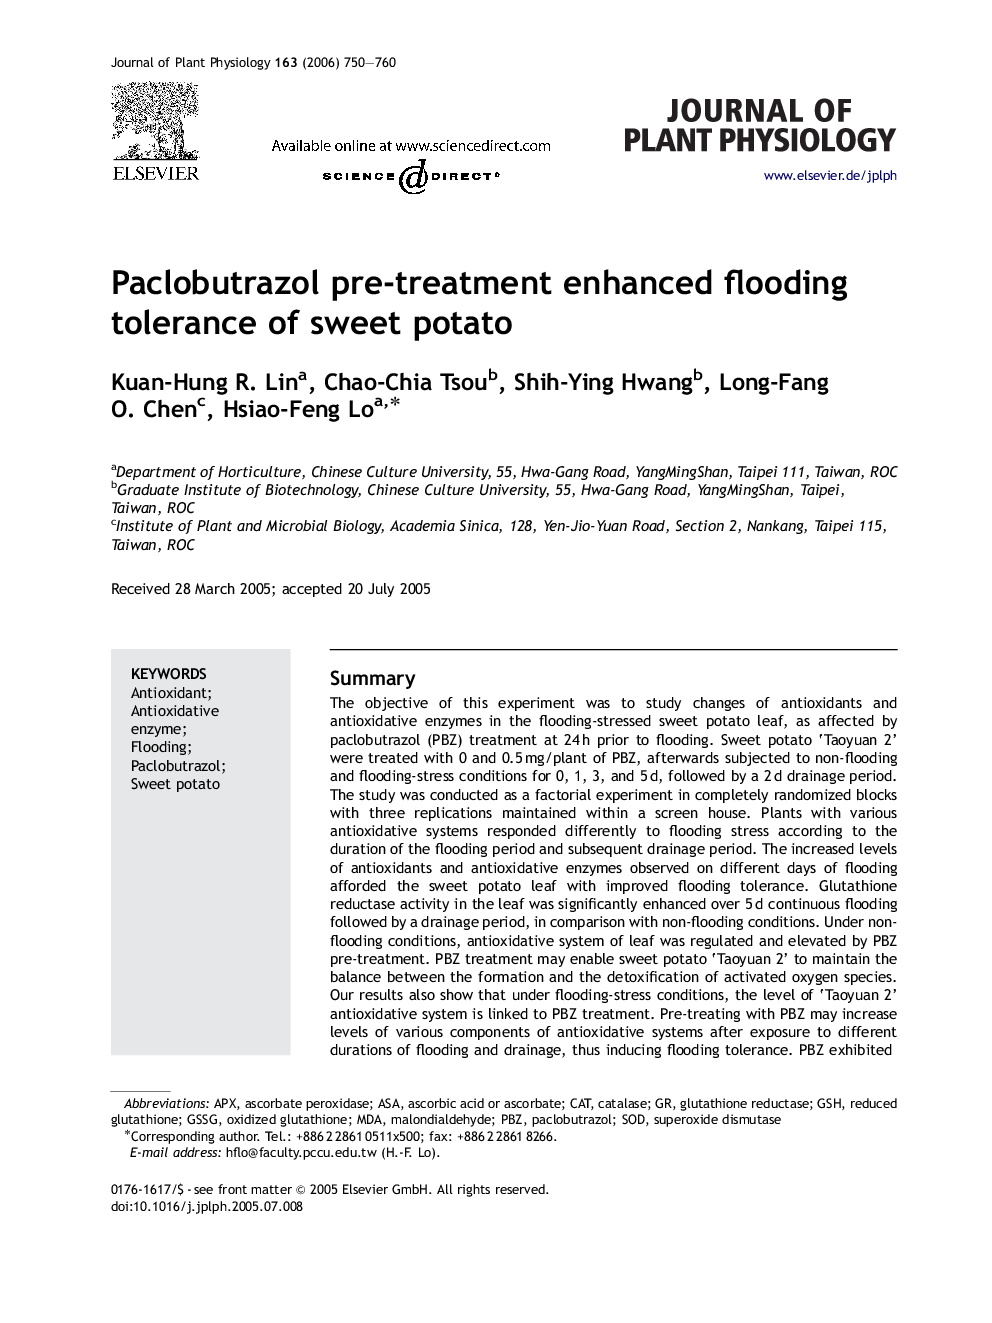 Paclobutrazol pre-treatment enhanced flooding tolerance of sweet potato